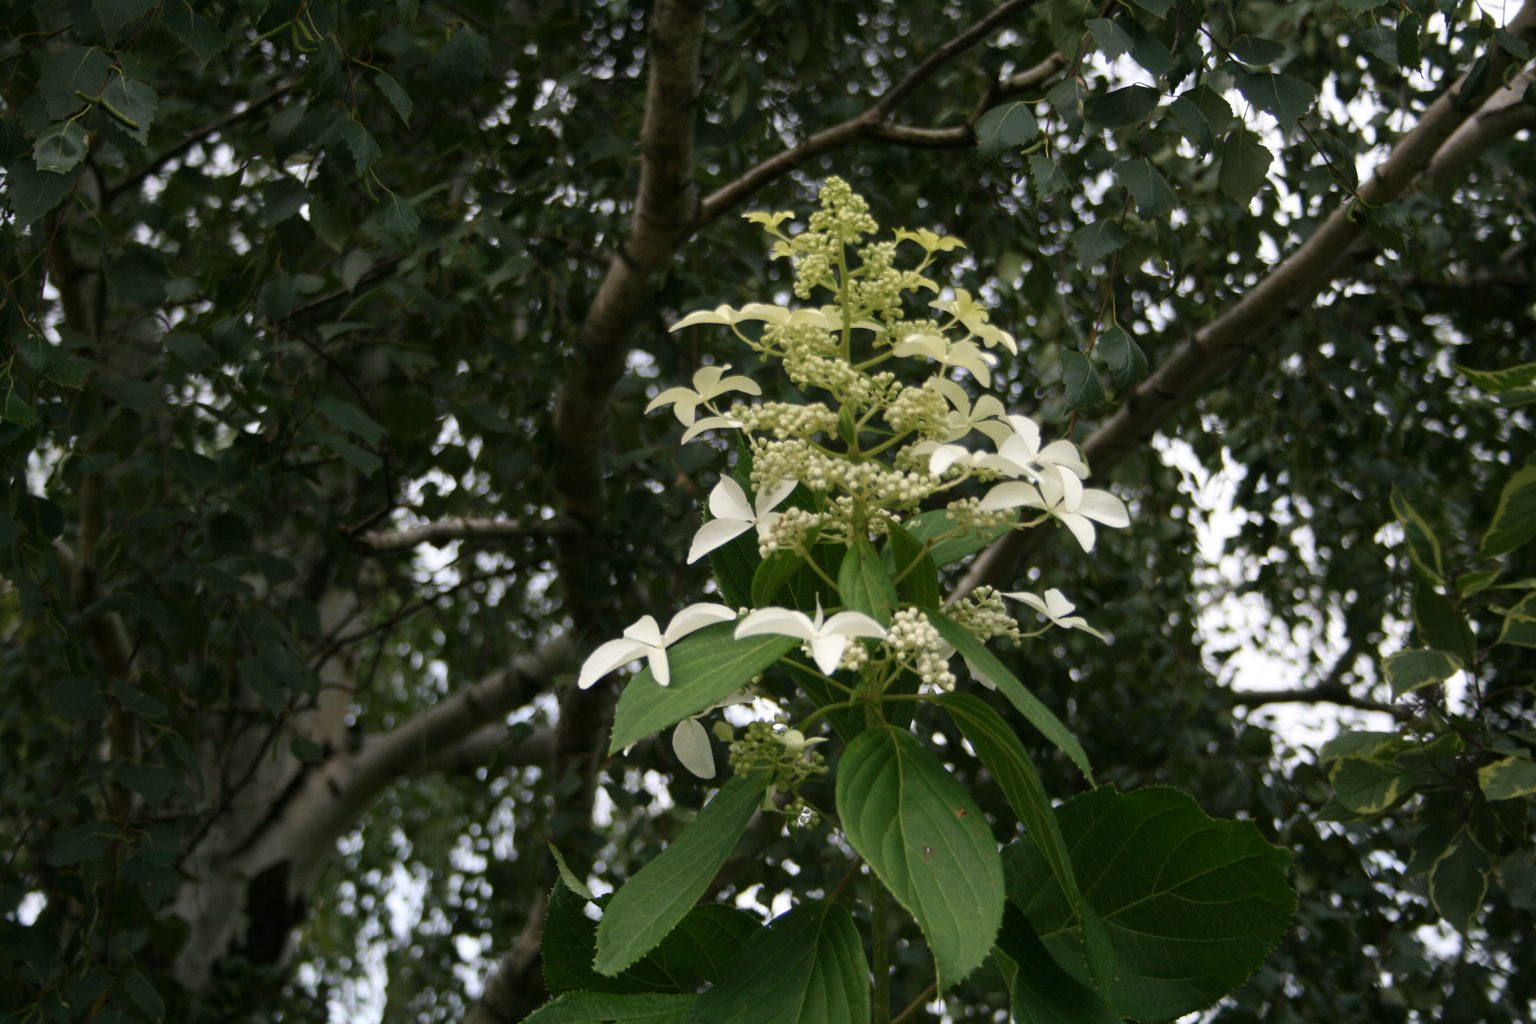 Hortensja bukietowa "Great Star" / Hydrangea paniculata "Great Star"